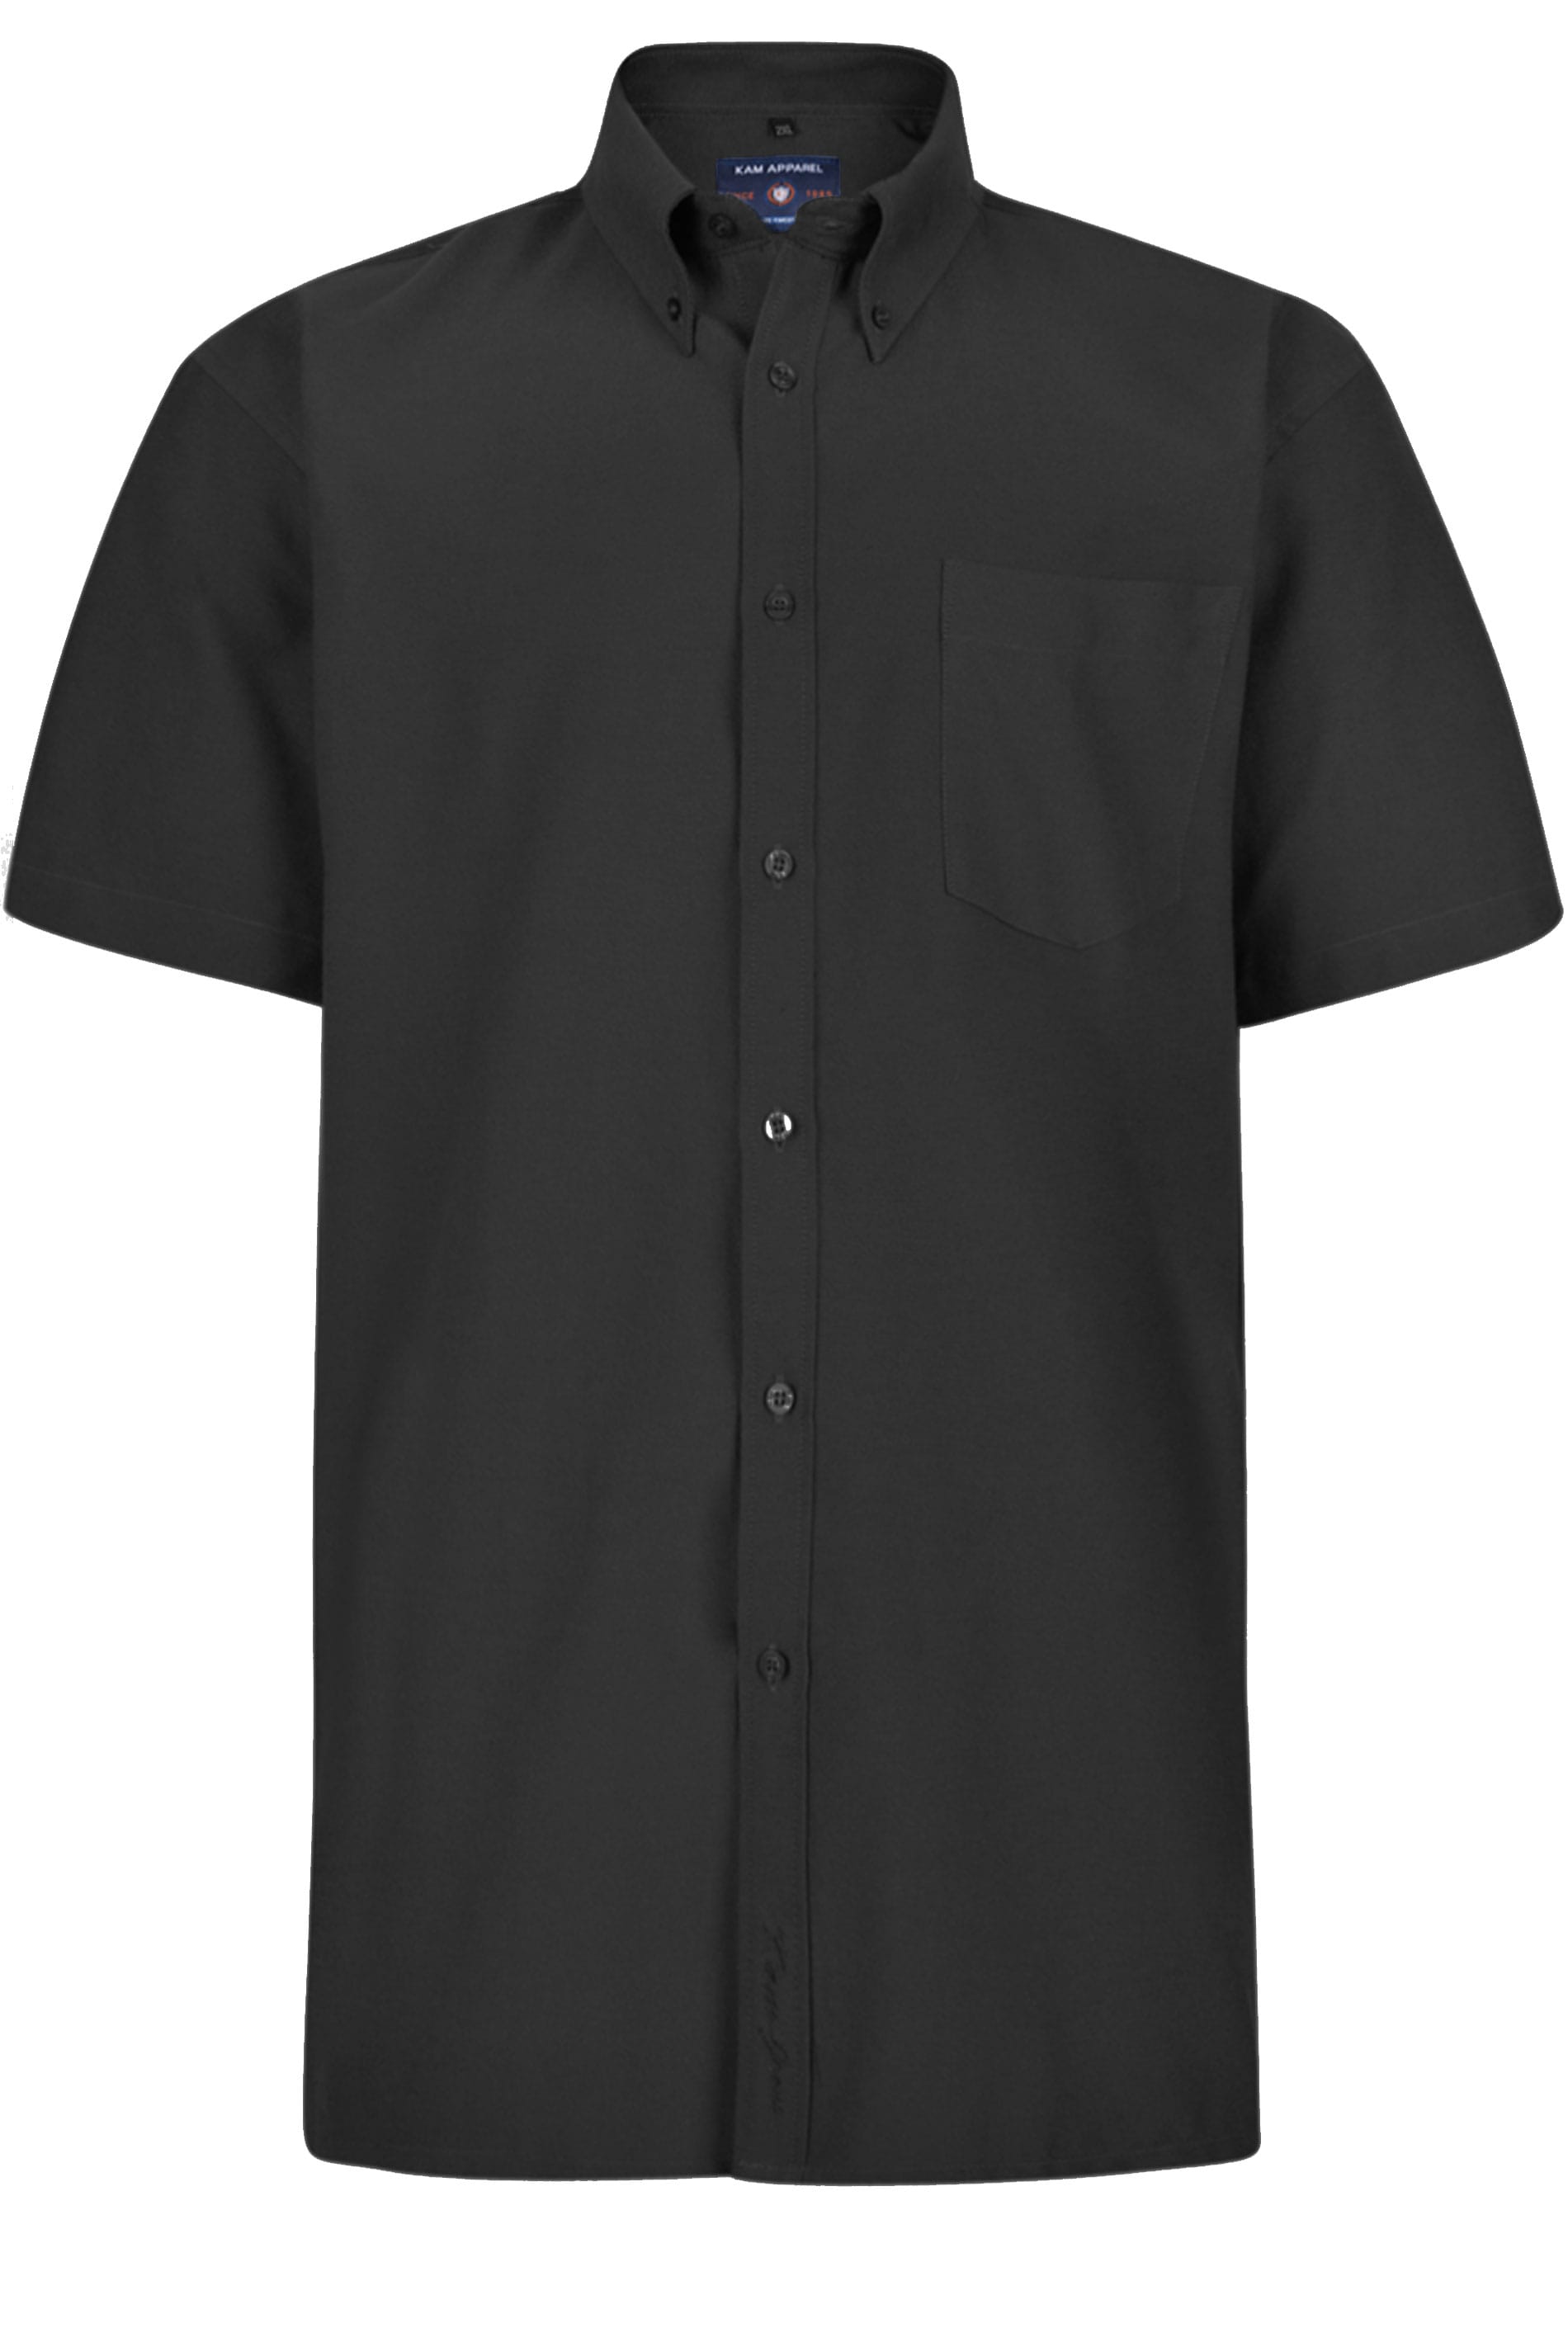 KAM Big & Tall Black Oxford Short Sleeve Shirt | BadRhino 1